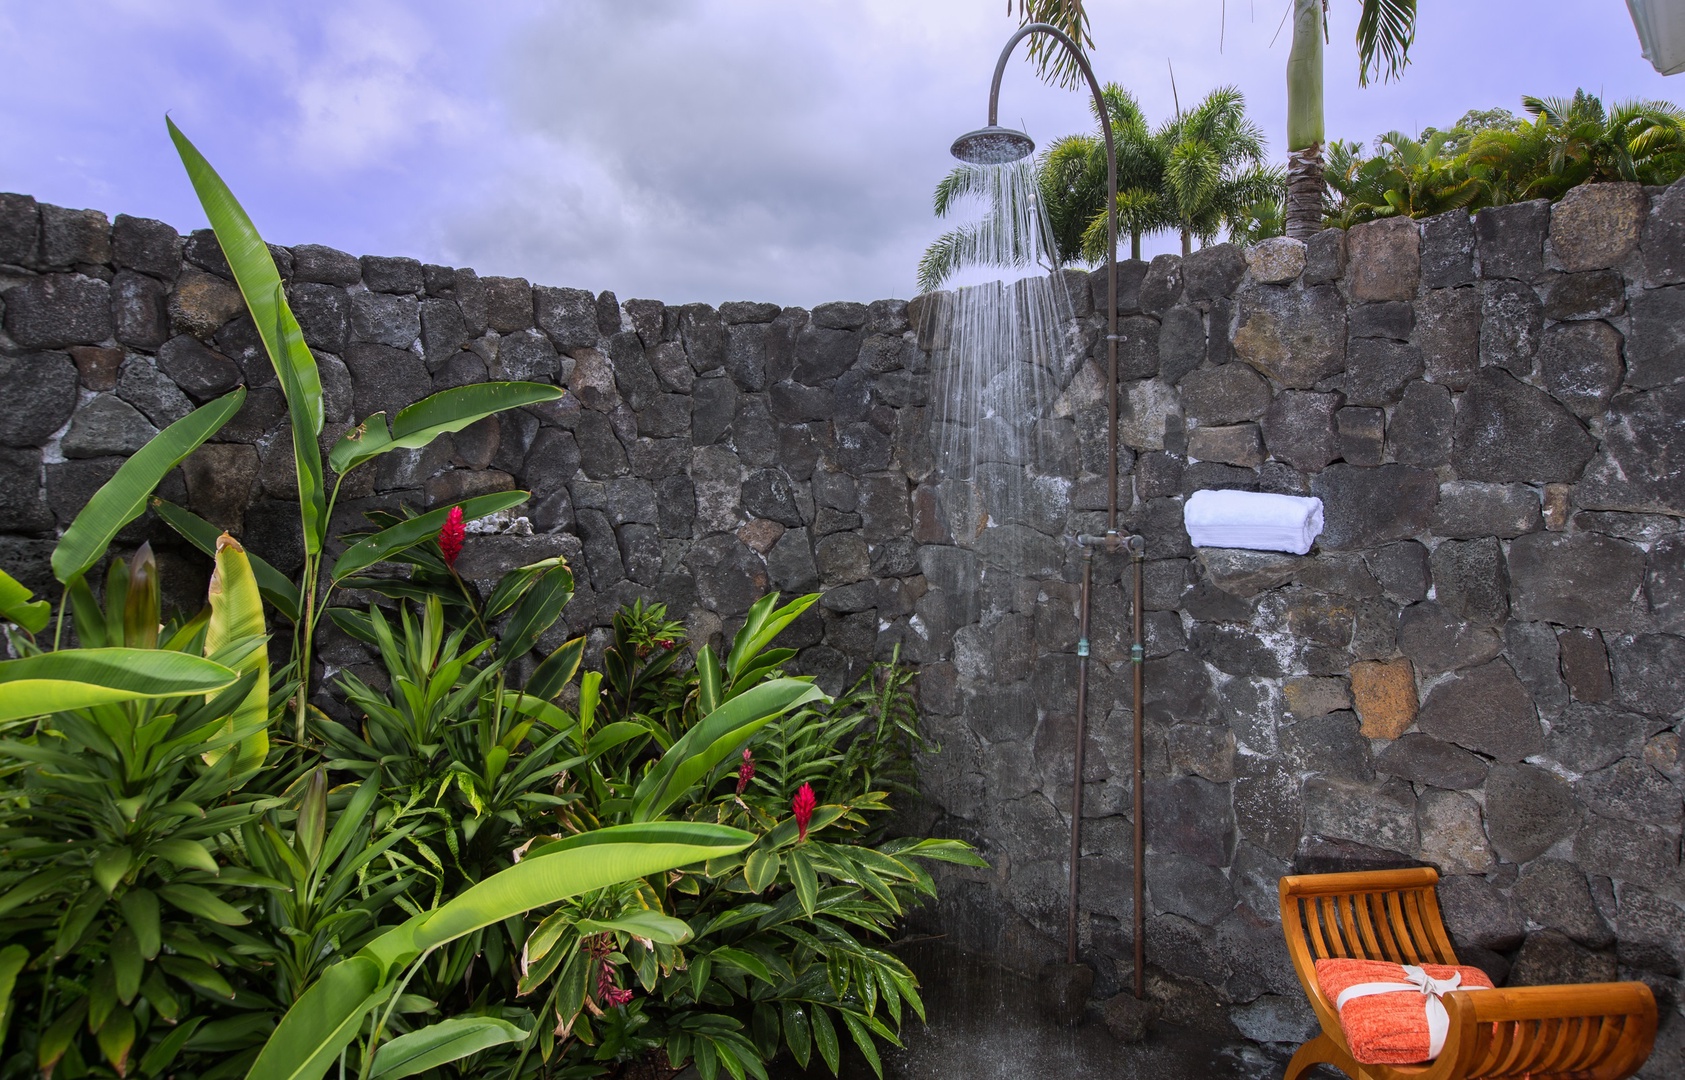 Kailua Kona Vacation Rentals, Hale Maluhia (Big Island) - Private outdoor shower